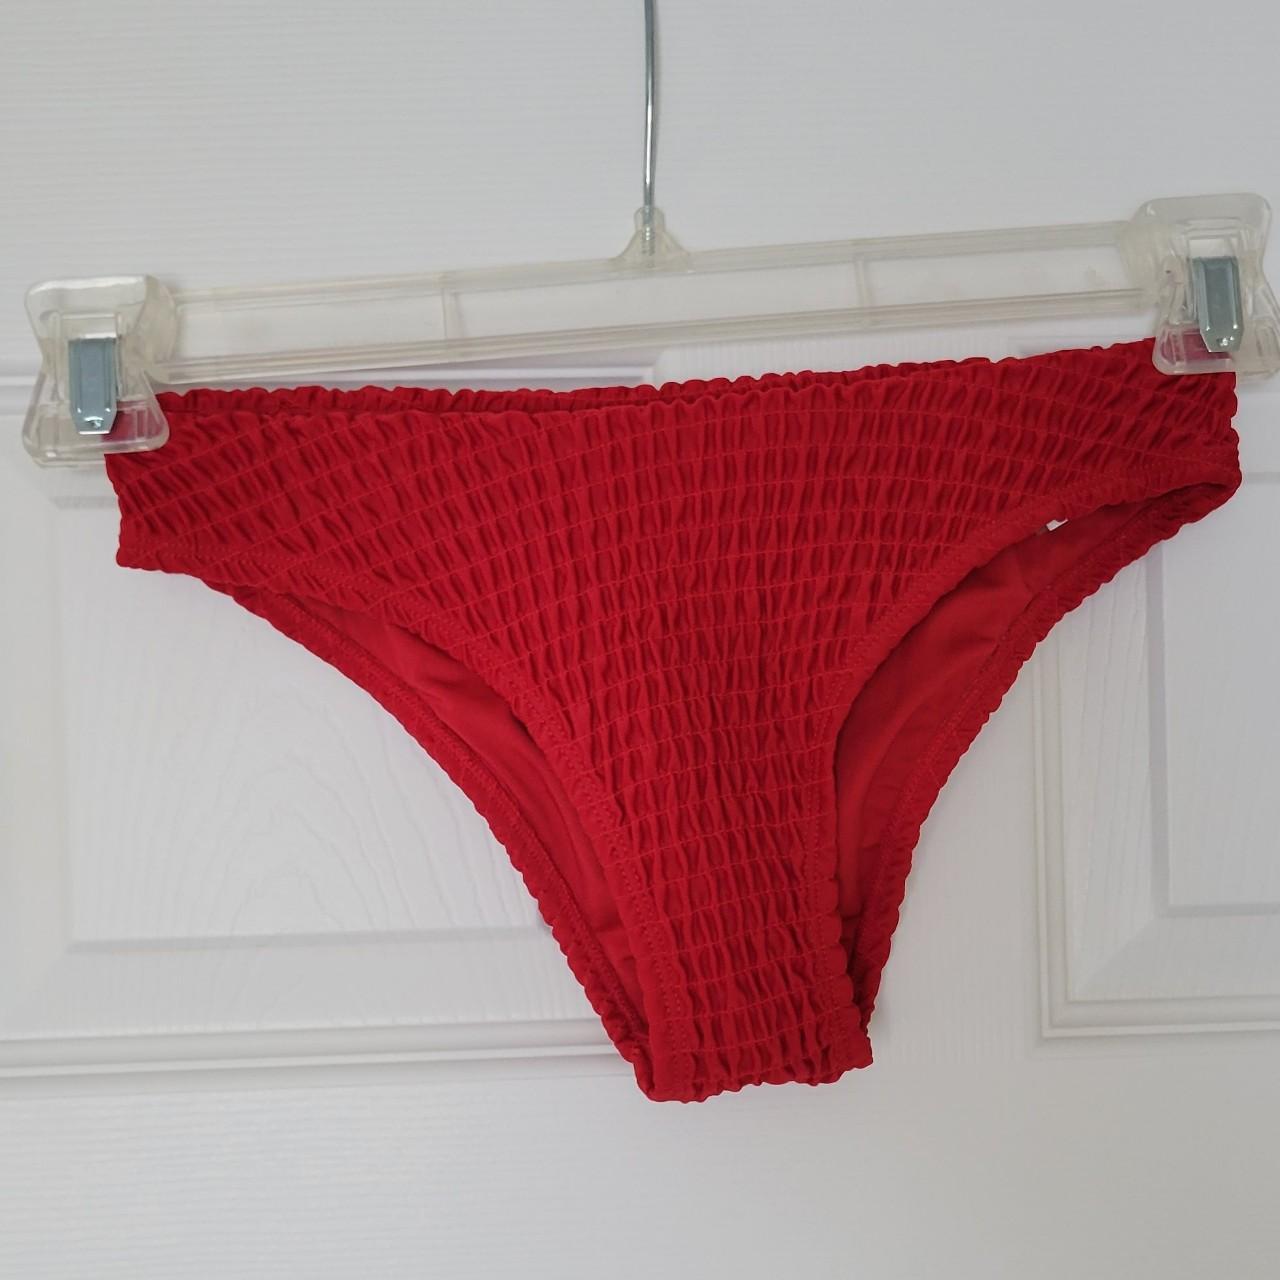 Product Image 1 - Mosmann Australia red rouched bikini